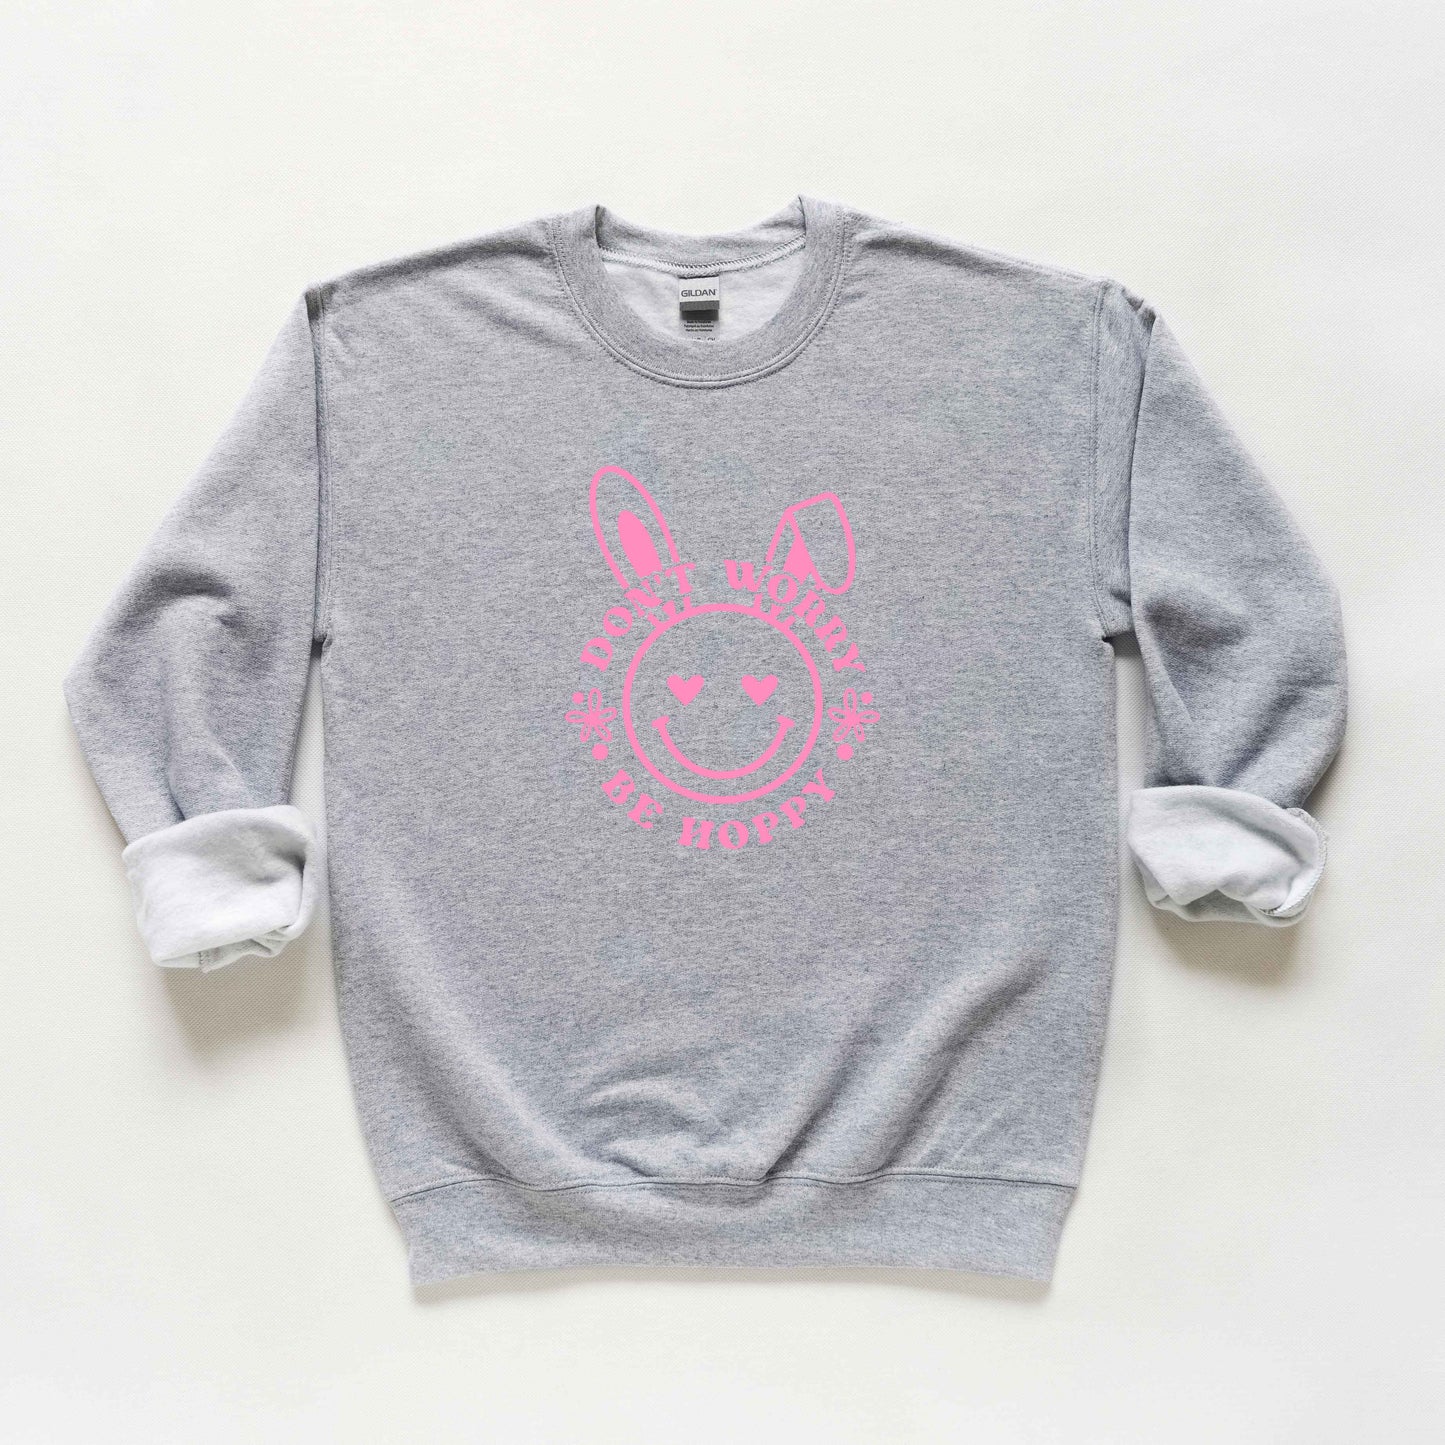 Don't Worry Be Hoppy Smiley Bunny | Youth Sweatshirt